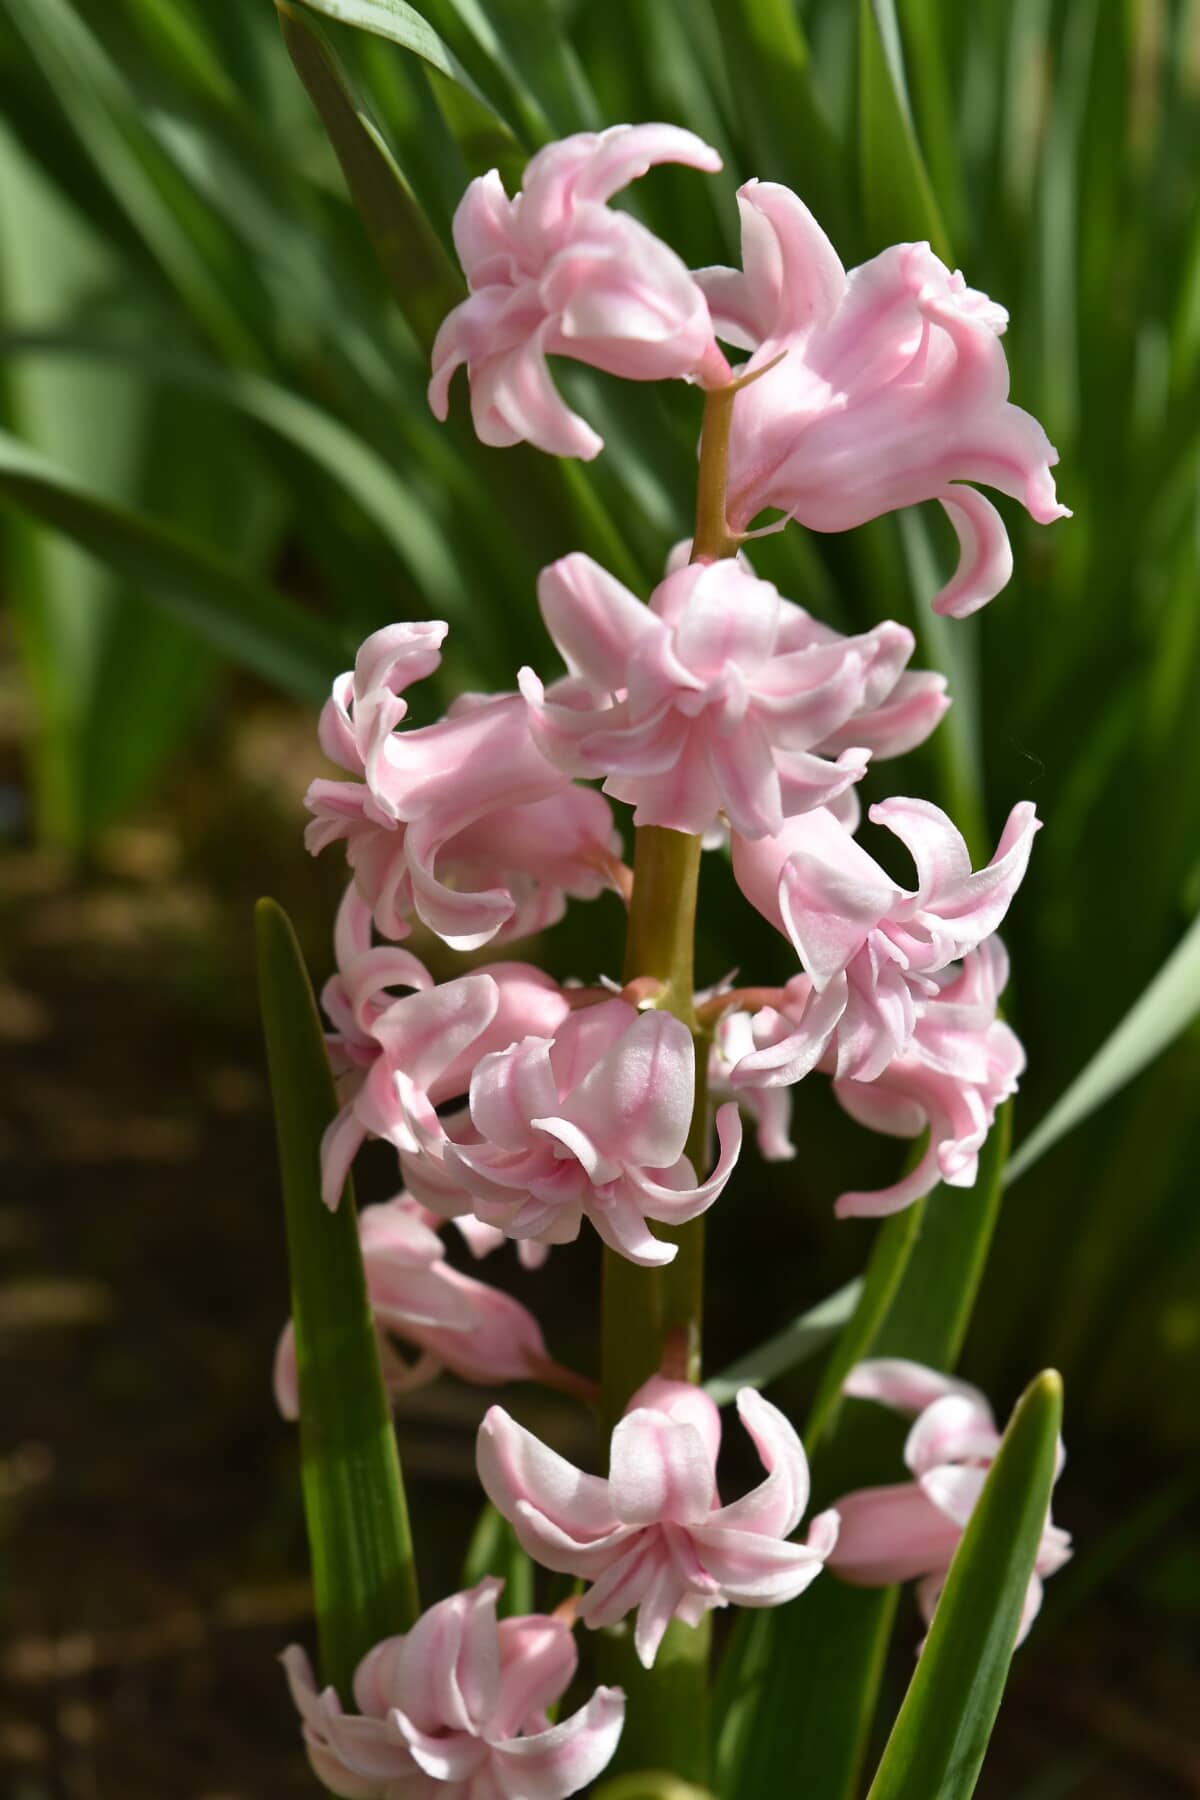 hyacinth, flower garden, pinkish, petals, flowers, blossom, flower, plant, flora, garden